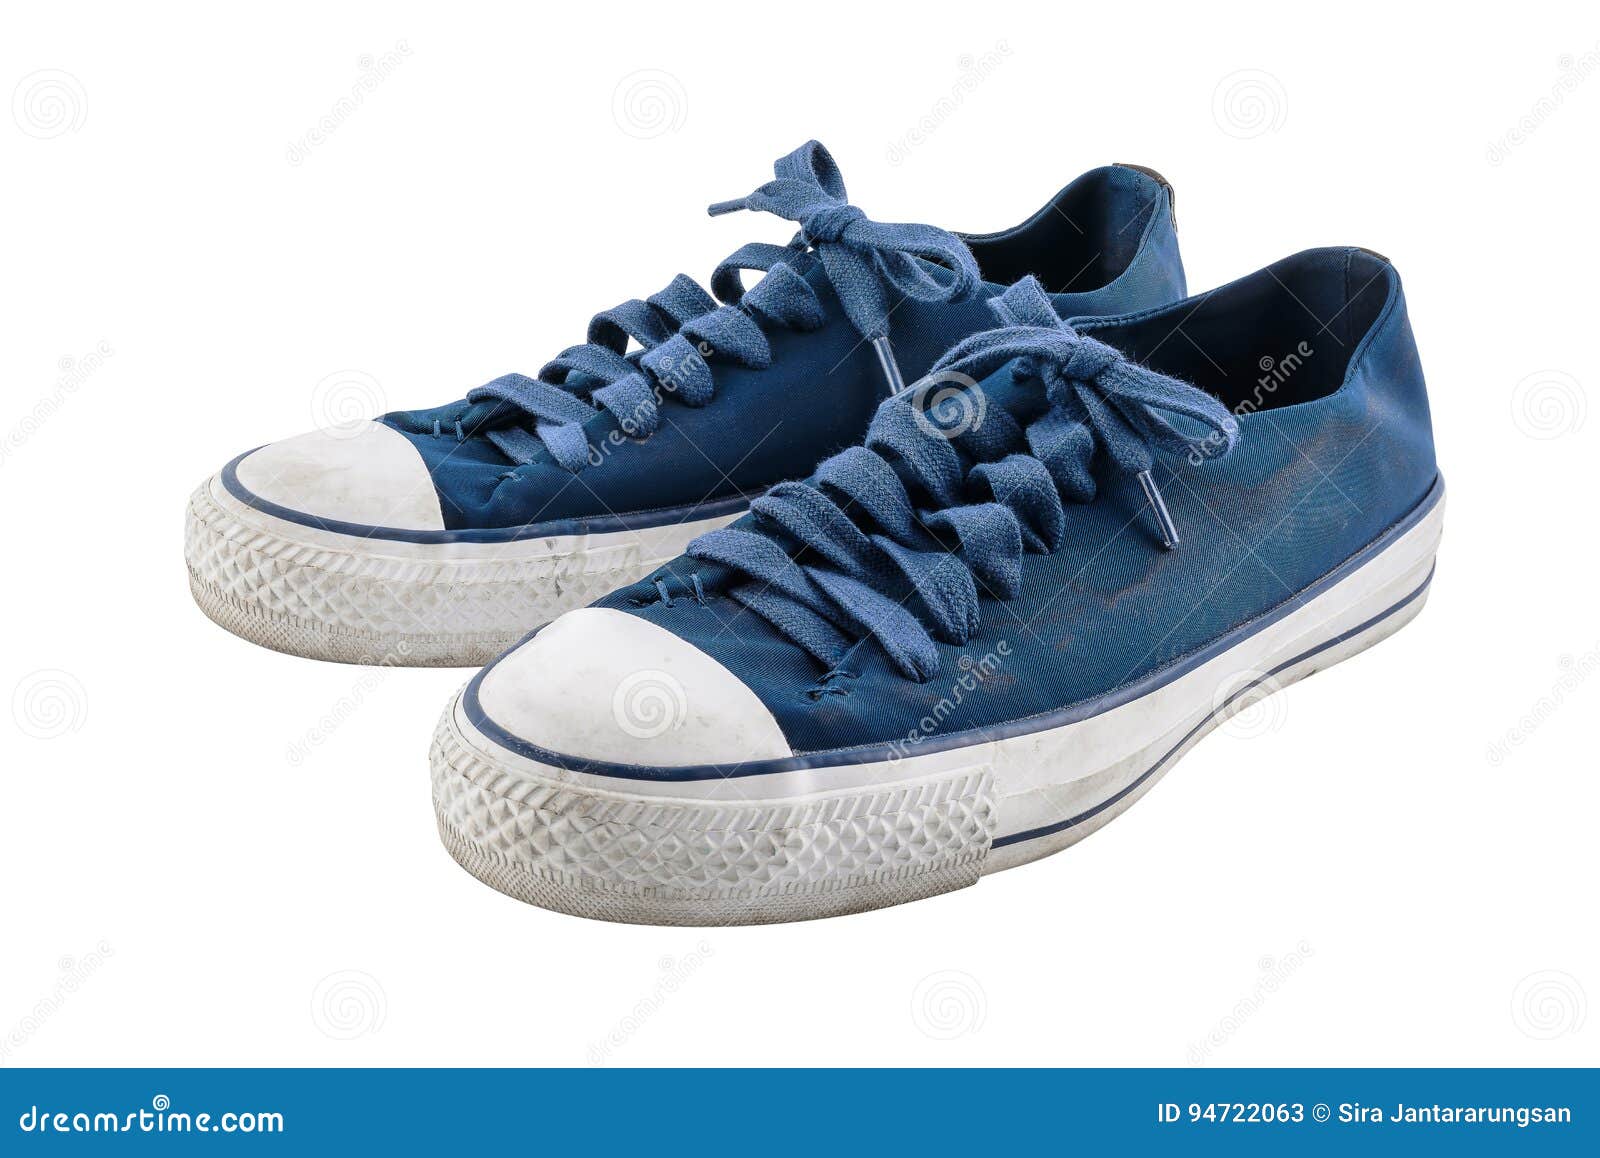 Blue Canvas Shoes Isolated on White Background Stock Image - Image of ...